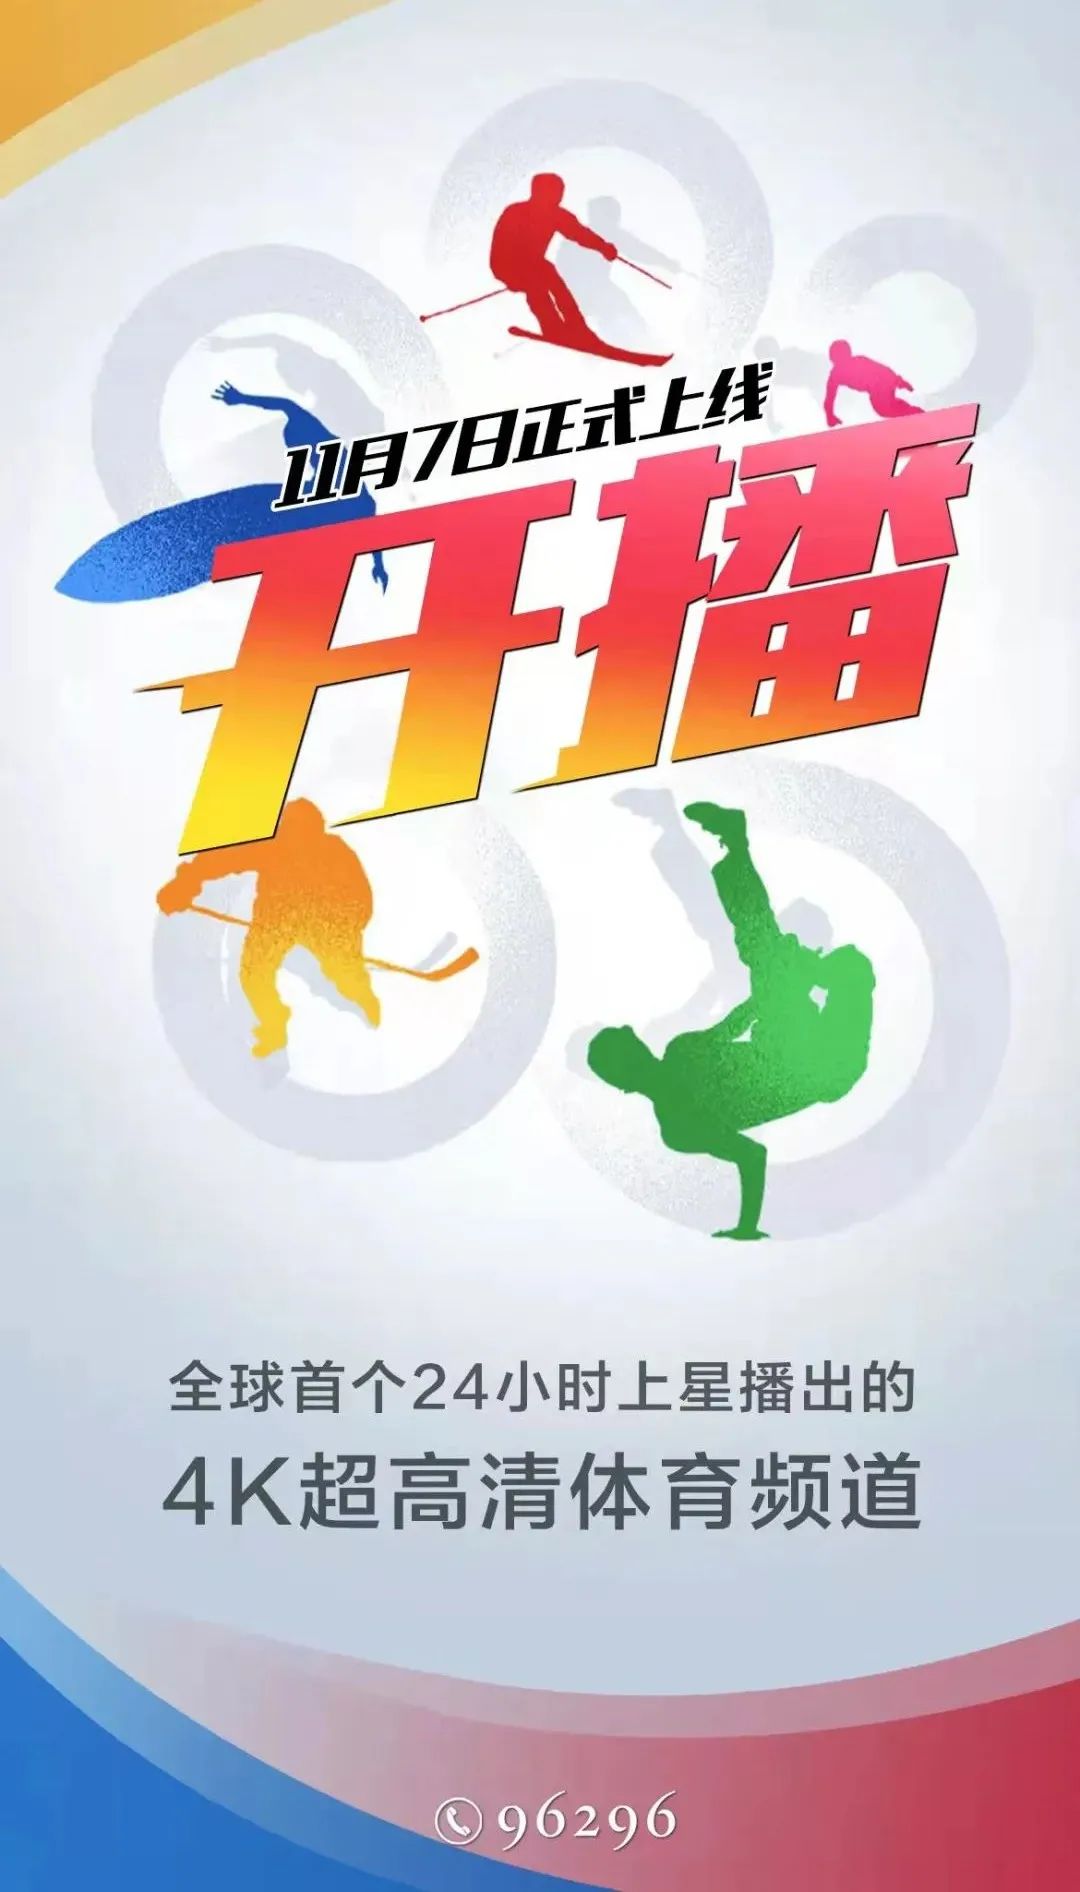 cctv16奥林匹克    4k超高清频道    今日登录江苏有线   全时段全